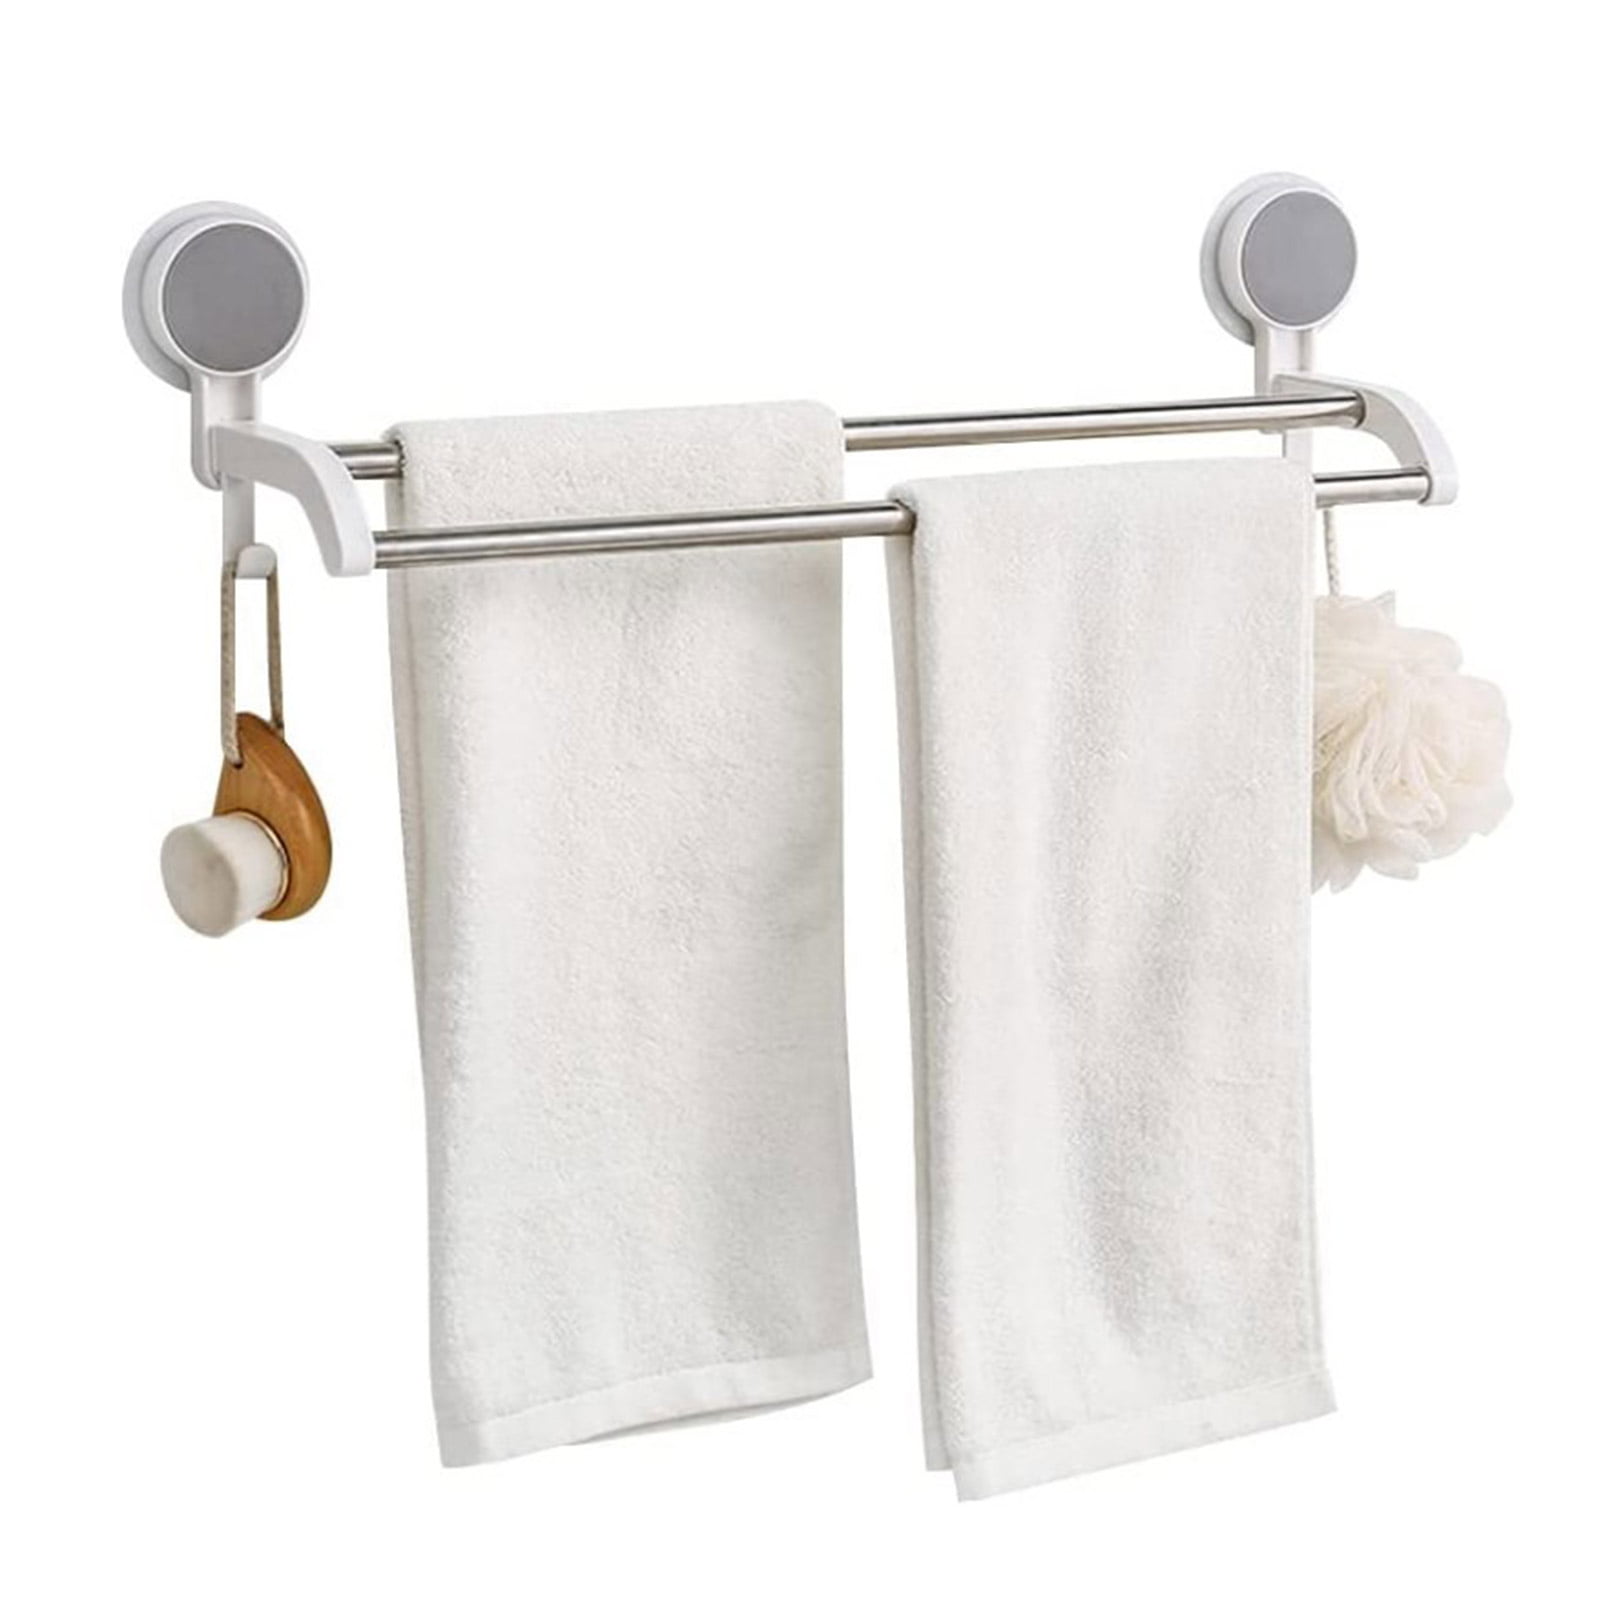 Self-adhesive Towel Holder Rack Wall Mounted Towel Hanger Bathroom Bar Holder 